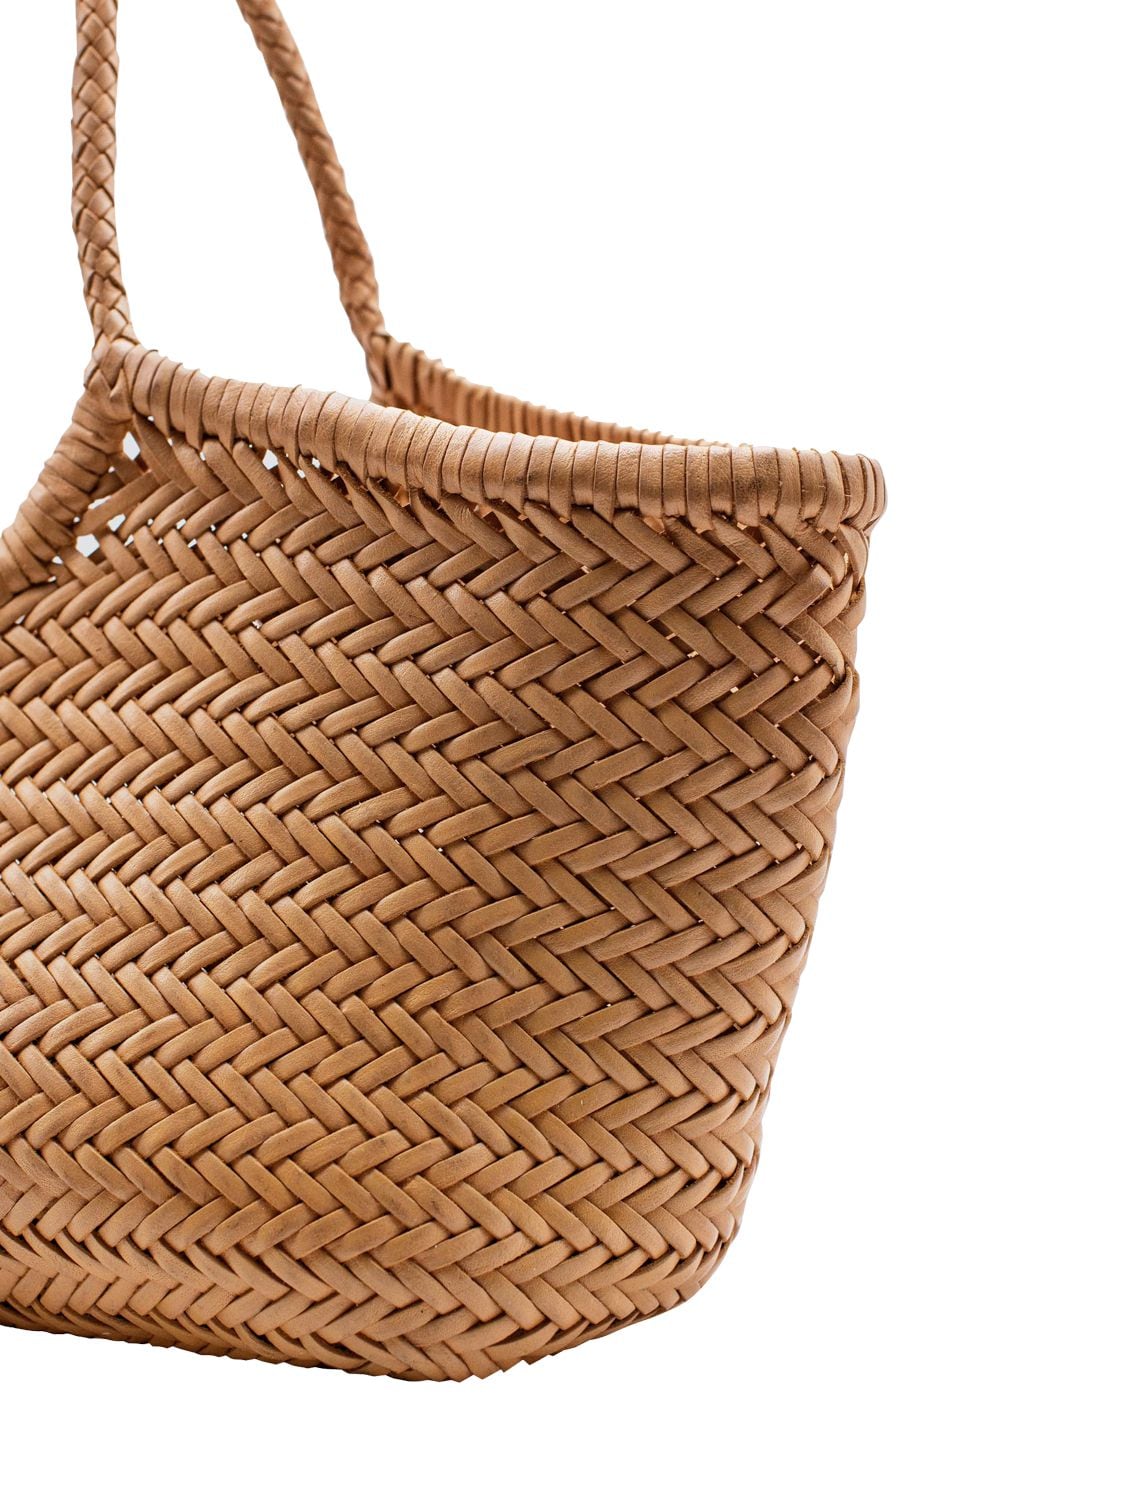 Dragon Diffusion Big Nantucket Woven Leather Basket Bag In Natural